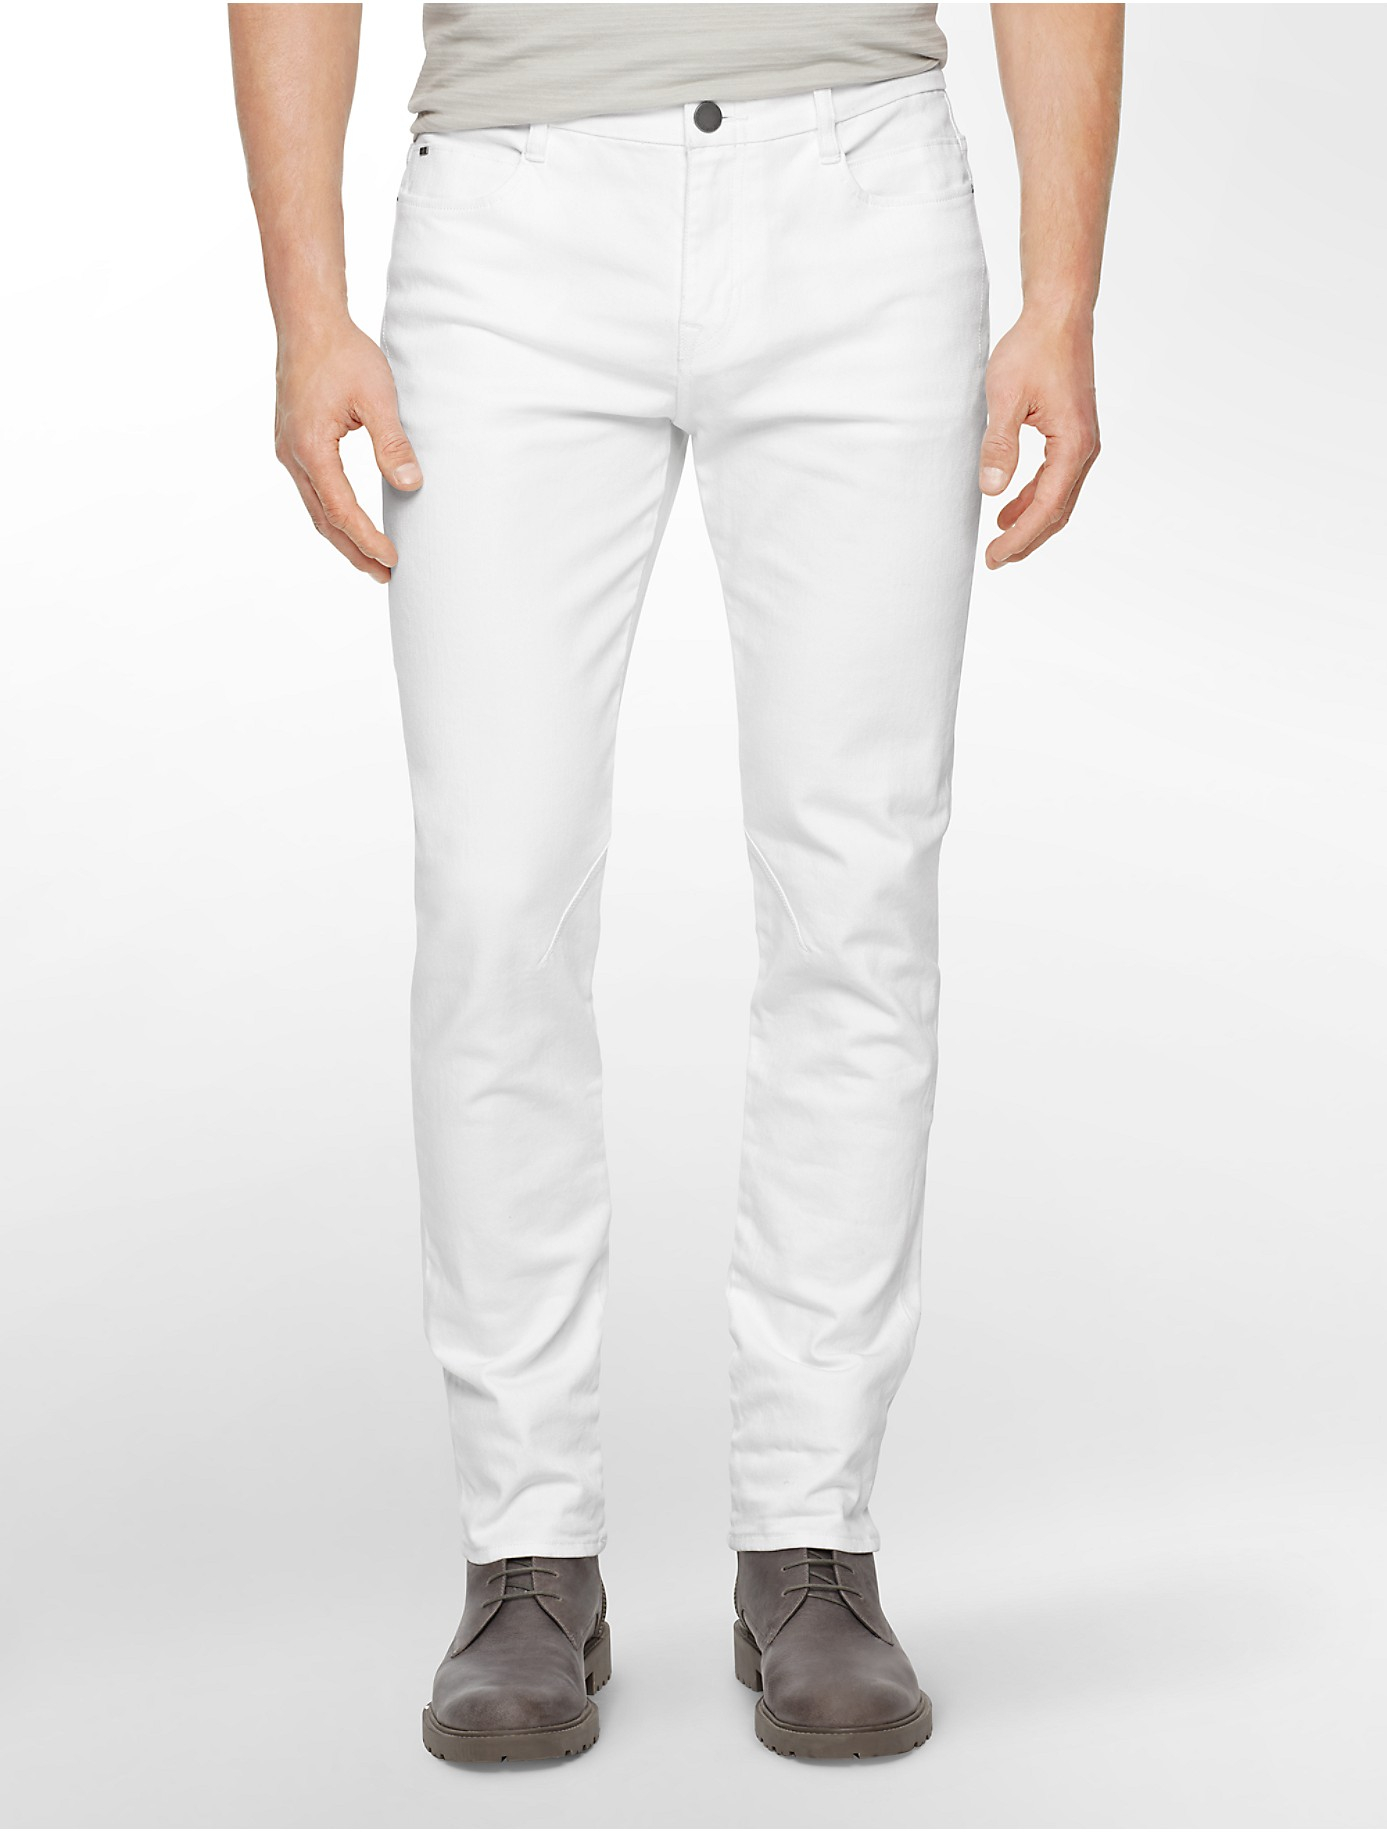 Lyst - Calvin Klein Jeans Slim Leg White Wash Jeans in White for Men